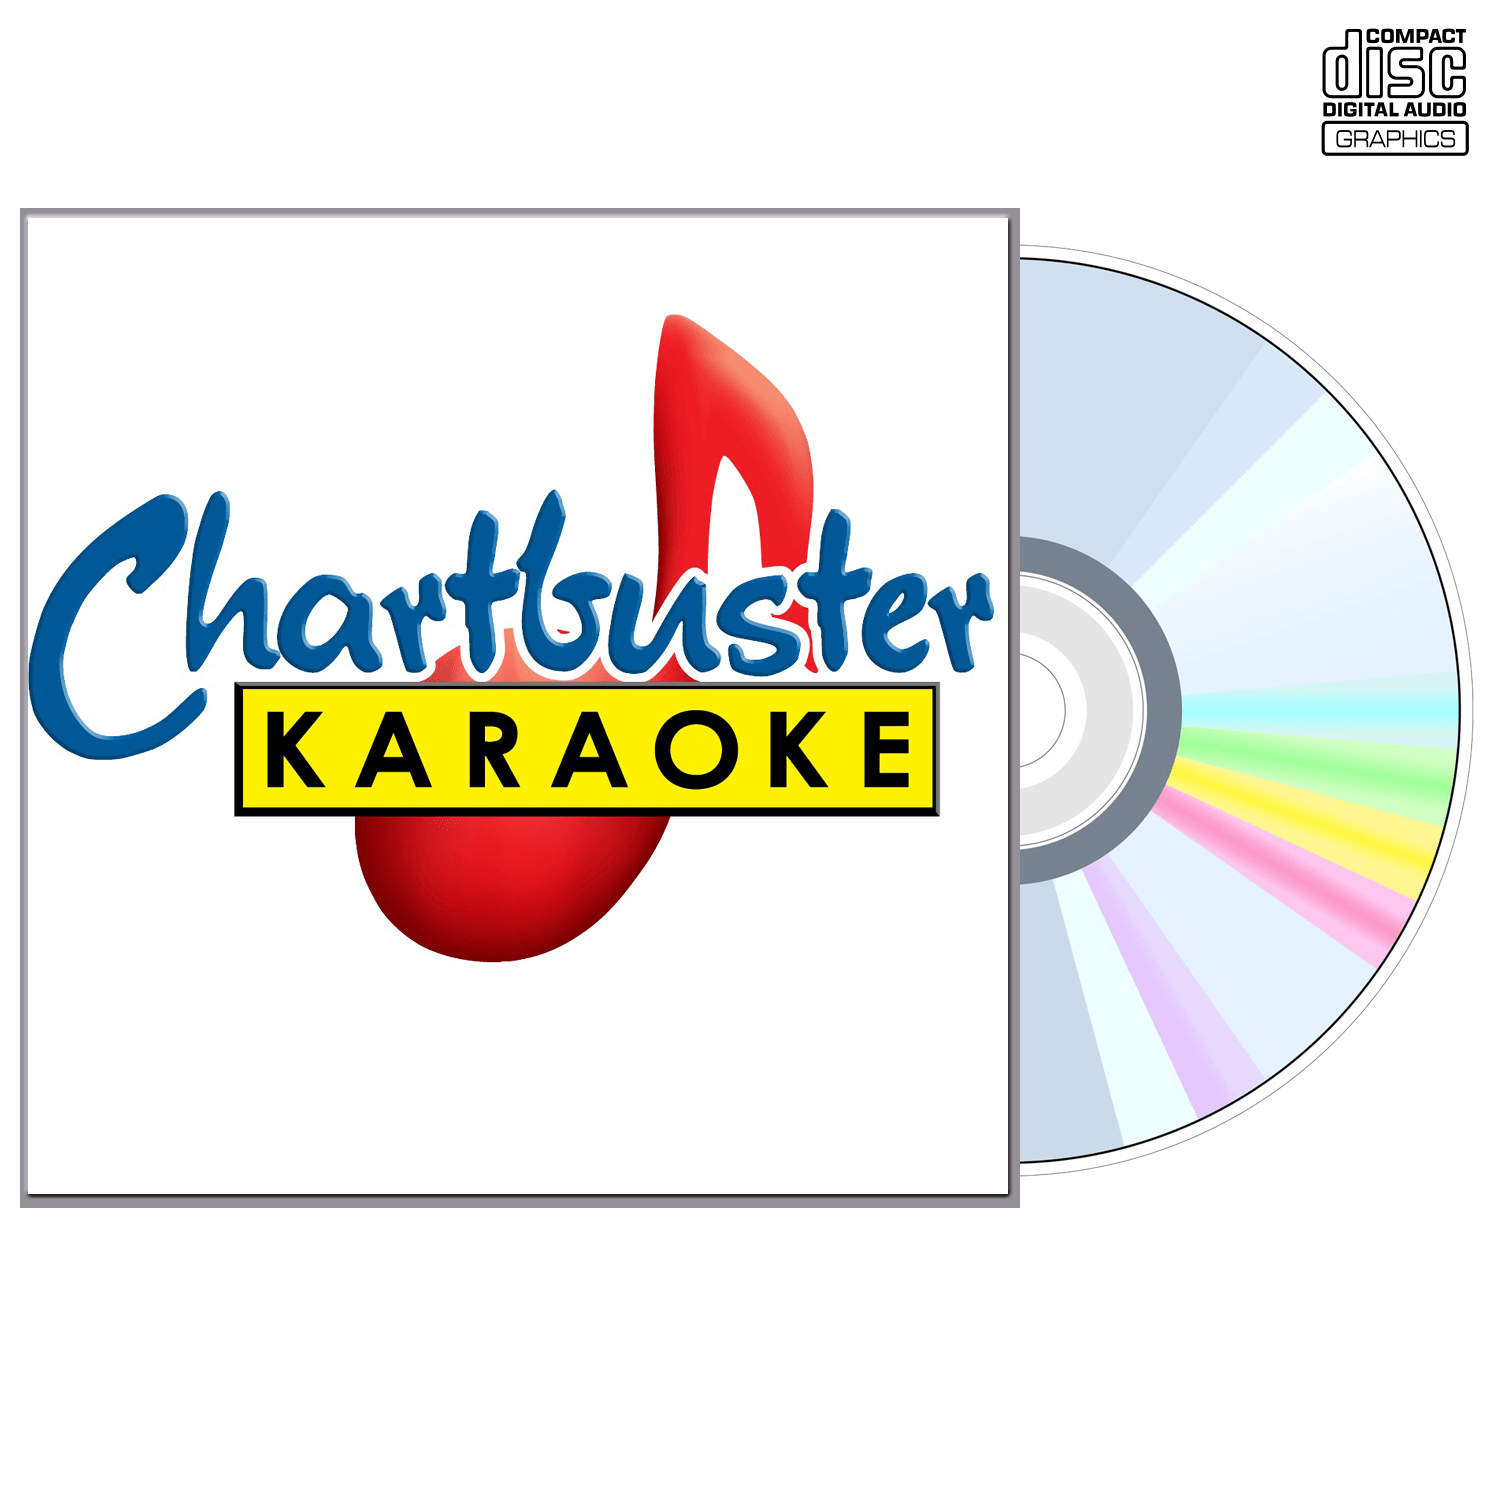 Ultimate 90's Collection V06 - CD+G - Chartbuster Karaoke - Karaoke Home Entertainment